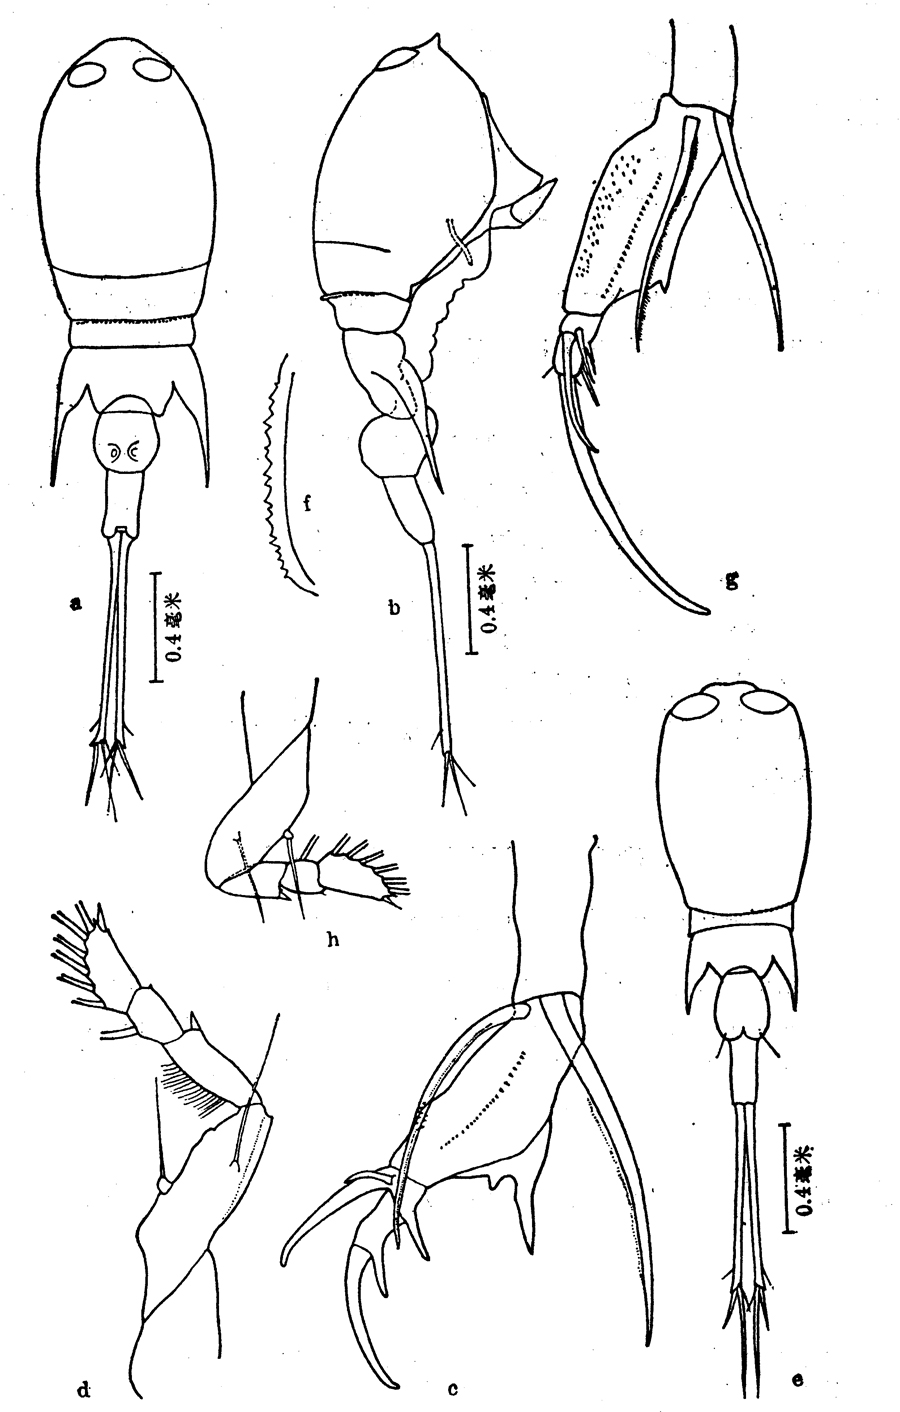 Species Corycaeus (Urocorycaeus) longistylis - Plate 8 of morphological figures